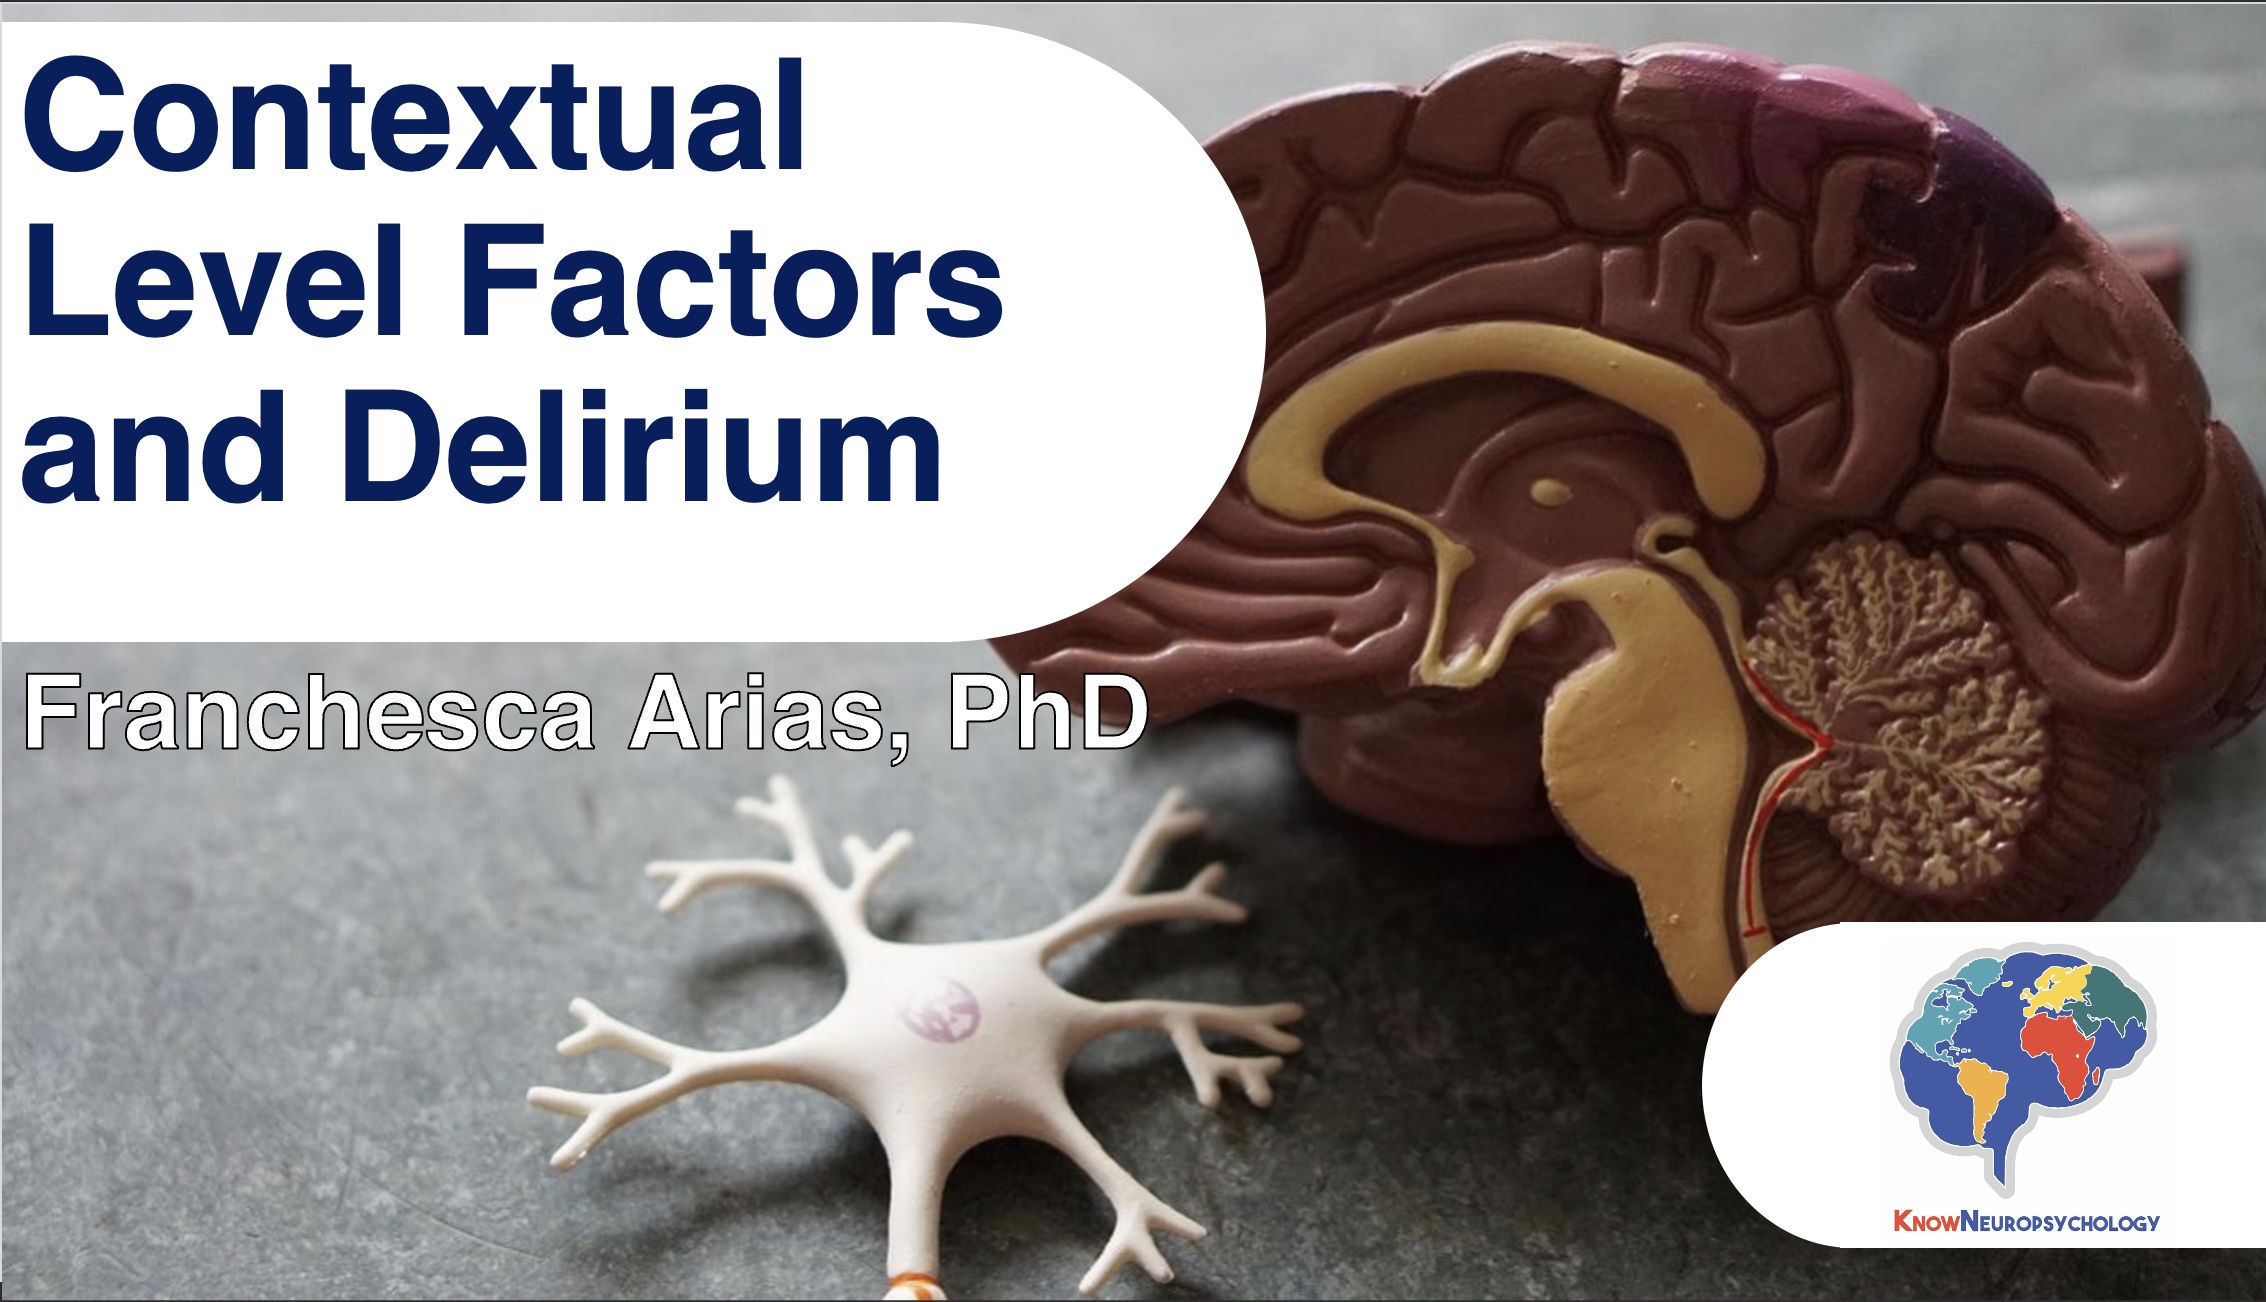 Contextual-level factors and delirium with Dr. Franchesca Arias